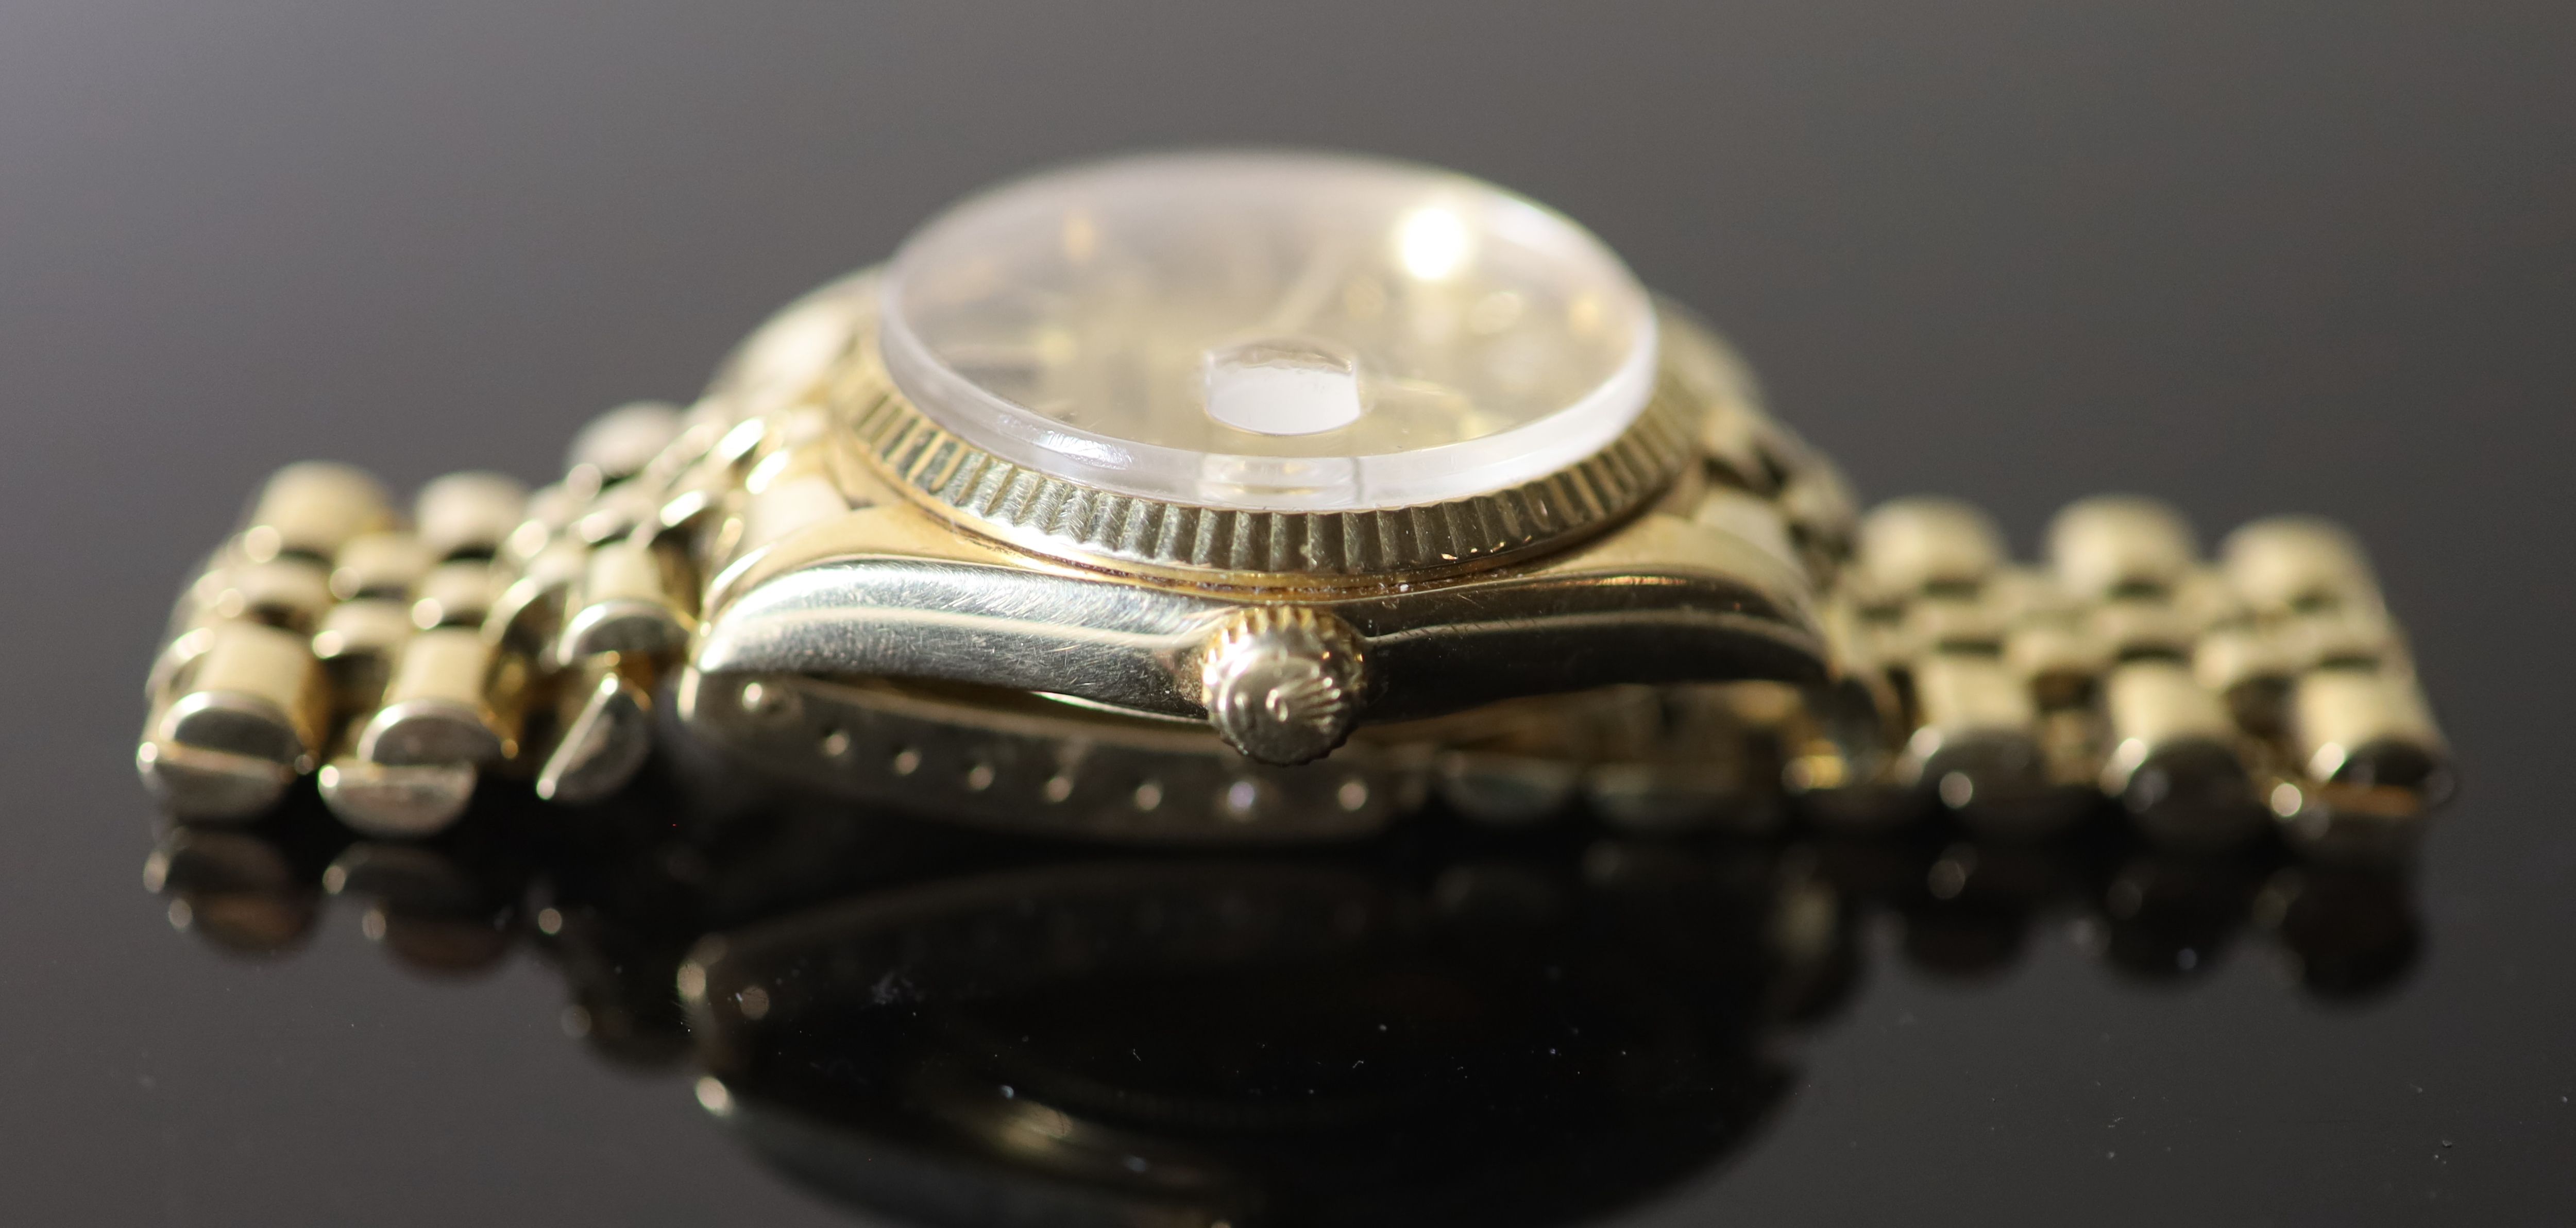 A gentlemans 1990s? 18k gold Rolex Oyster Perpetual Datejust wrist watch, on a 18k gold Rolex bracelet,